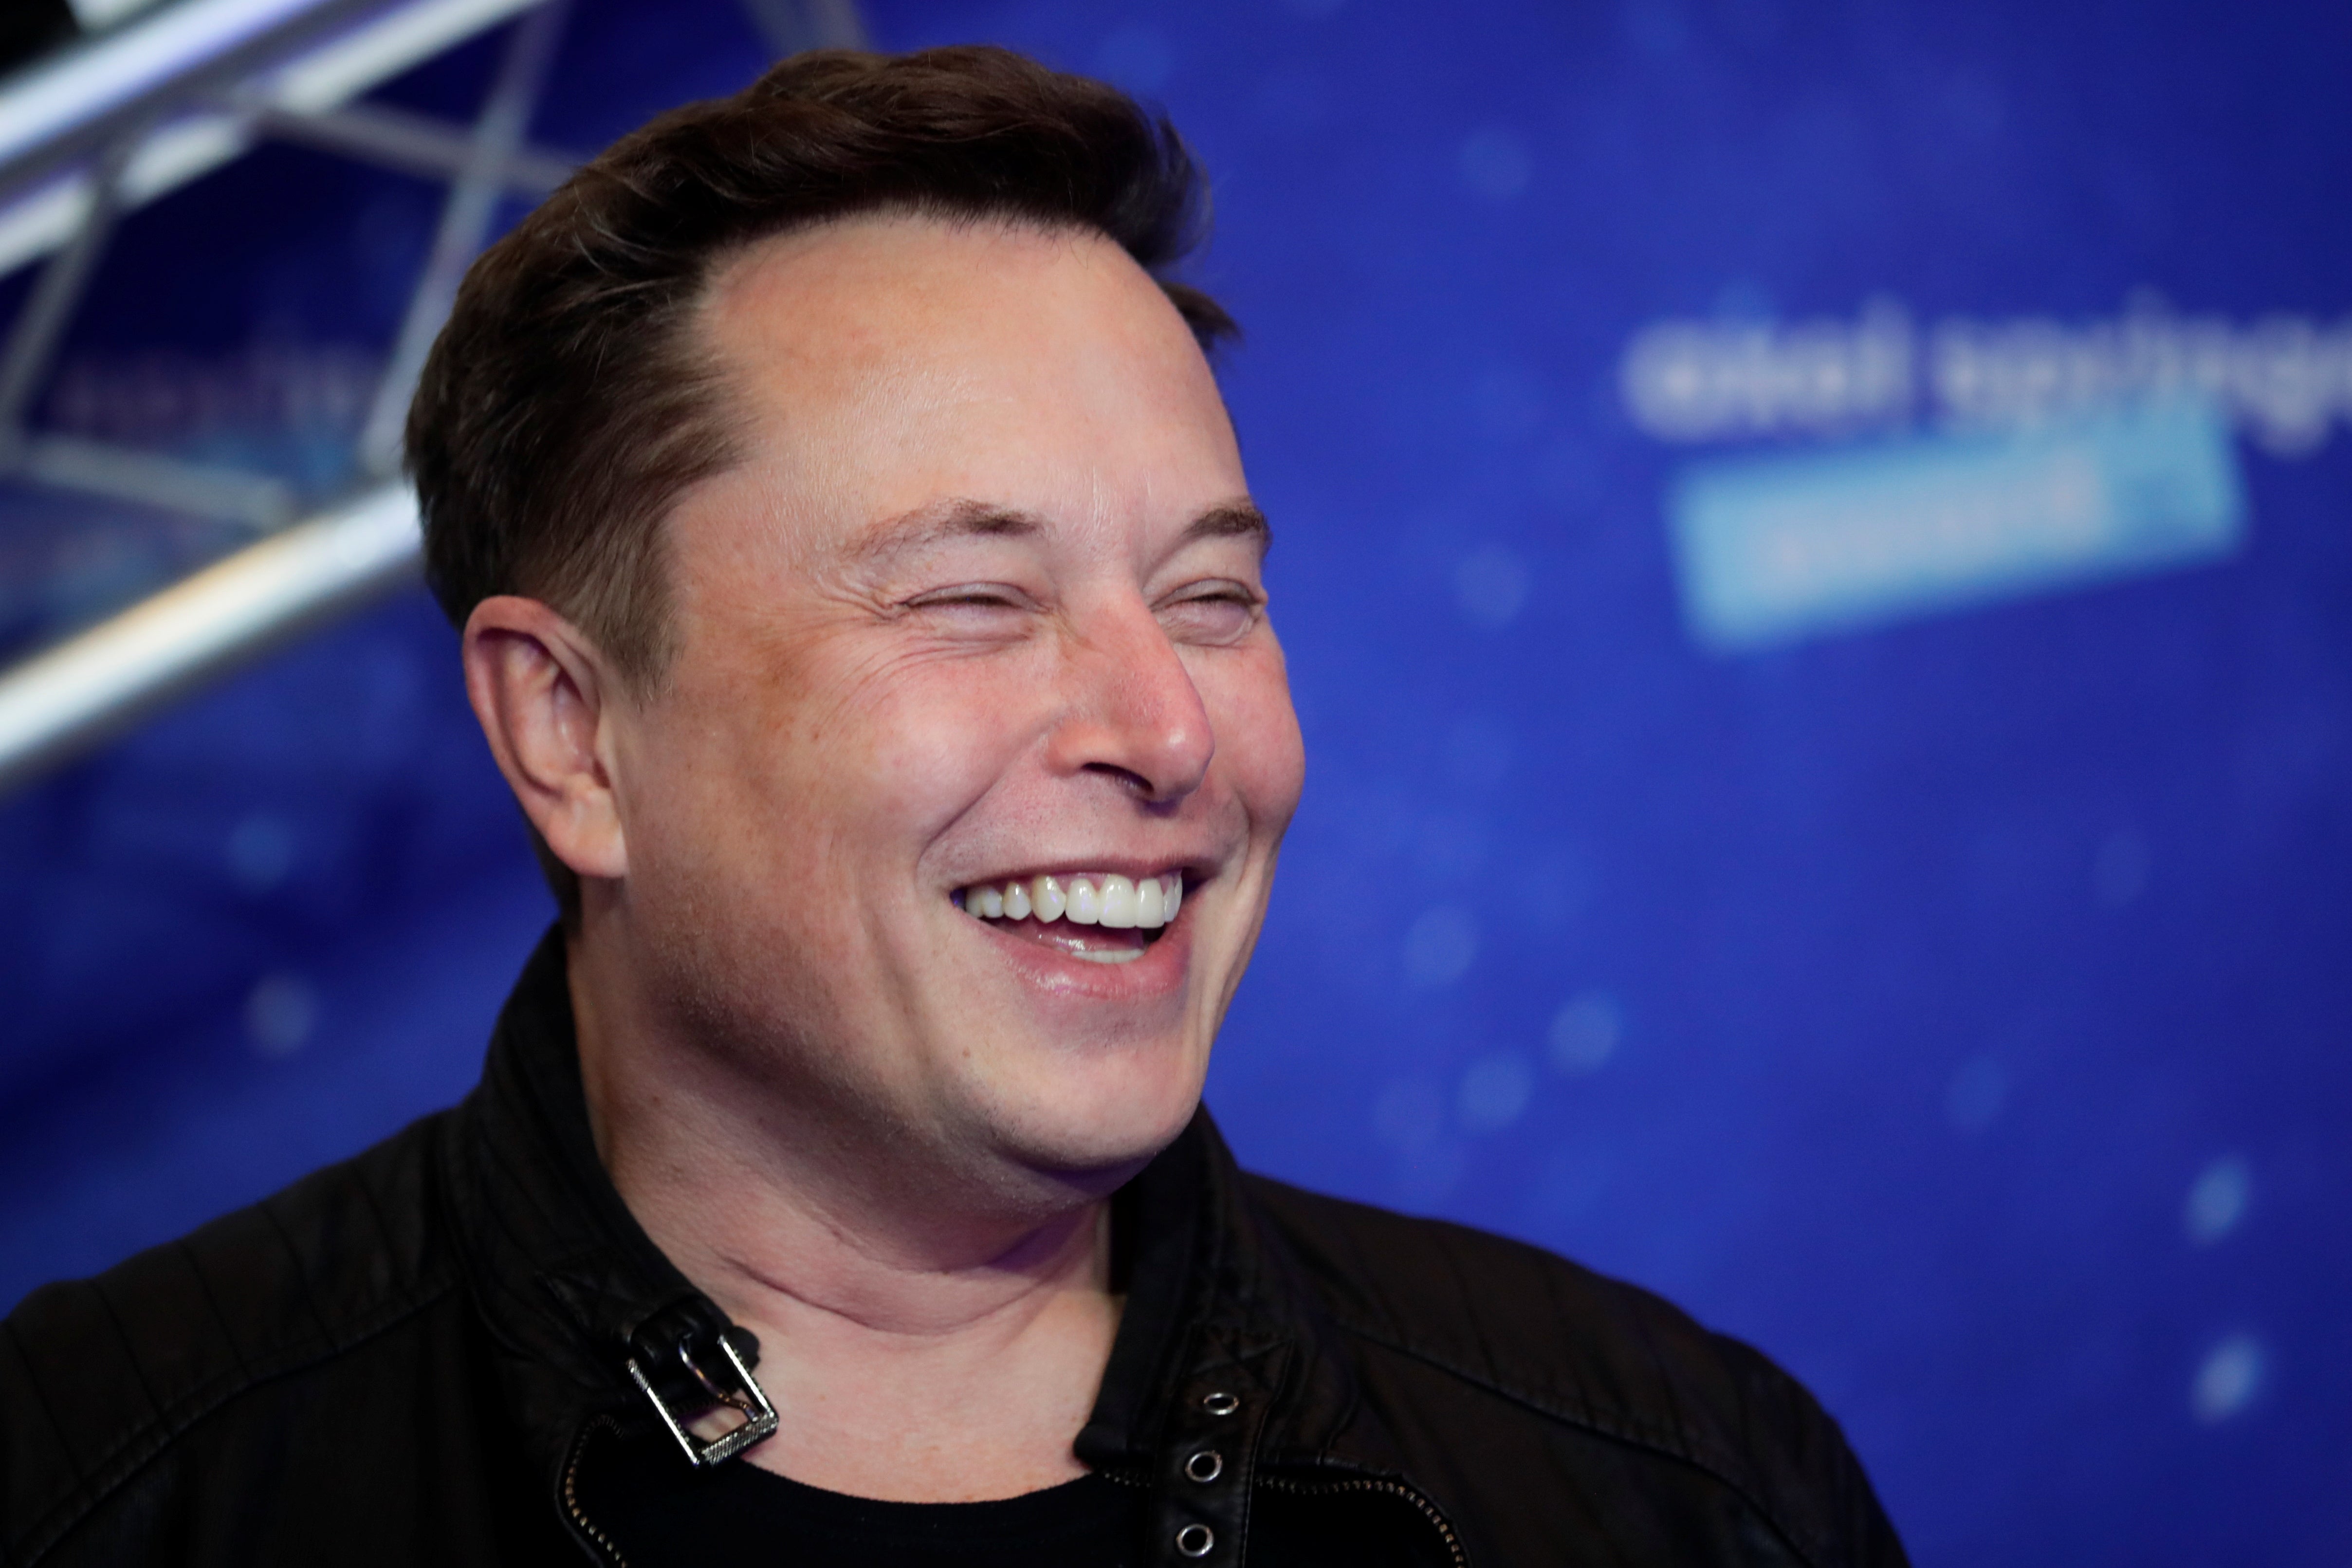 Elon Musk said he was not afraid of death